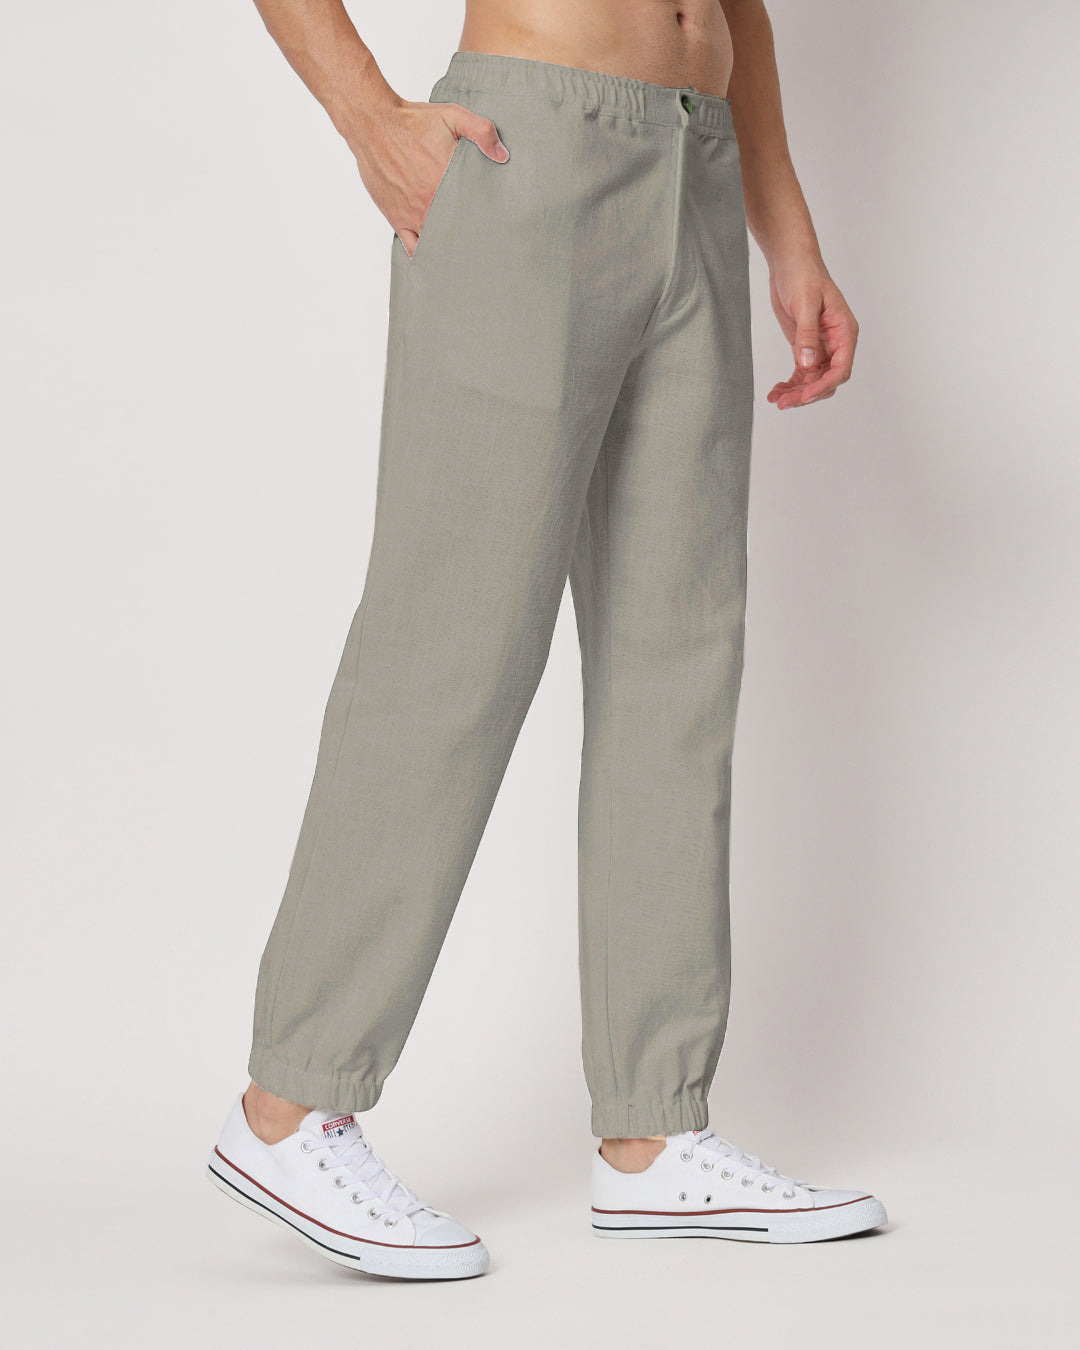 Combo: Spring Green & Grey Jog Men's Pants - Set of 2